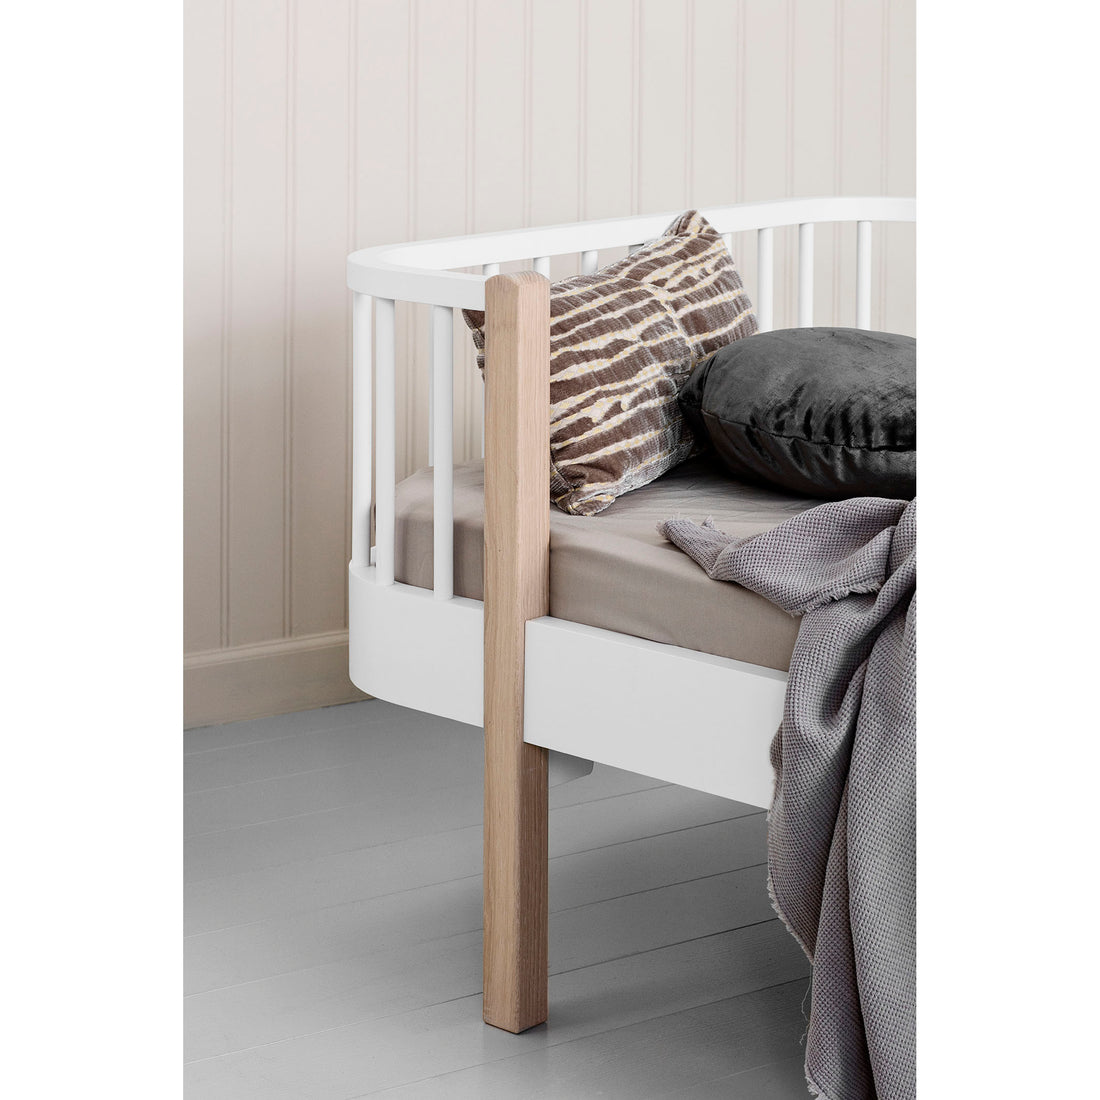 oliver-furniture-wood-cold-foam-mattress-for-beds- (6)